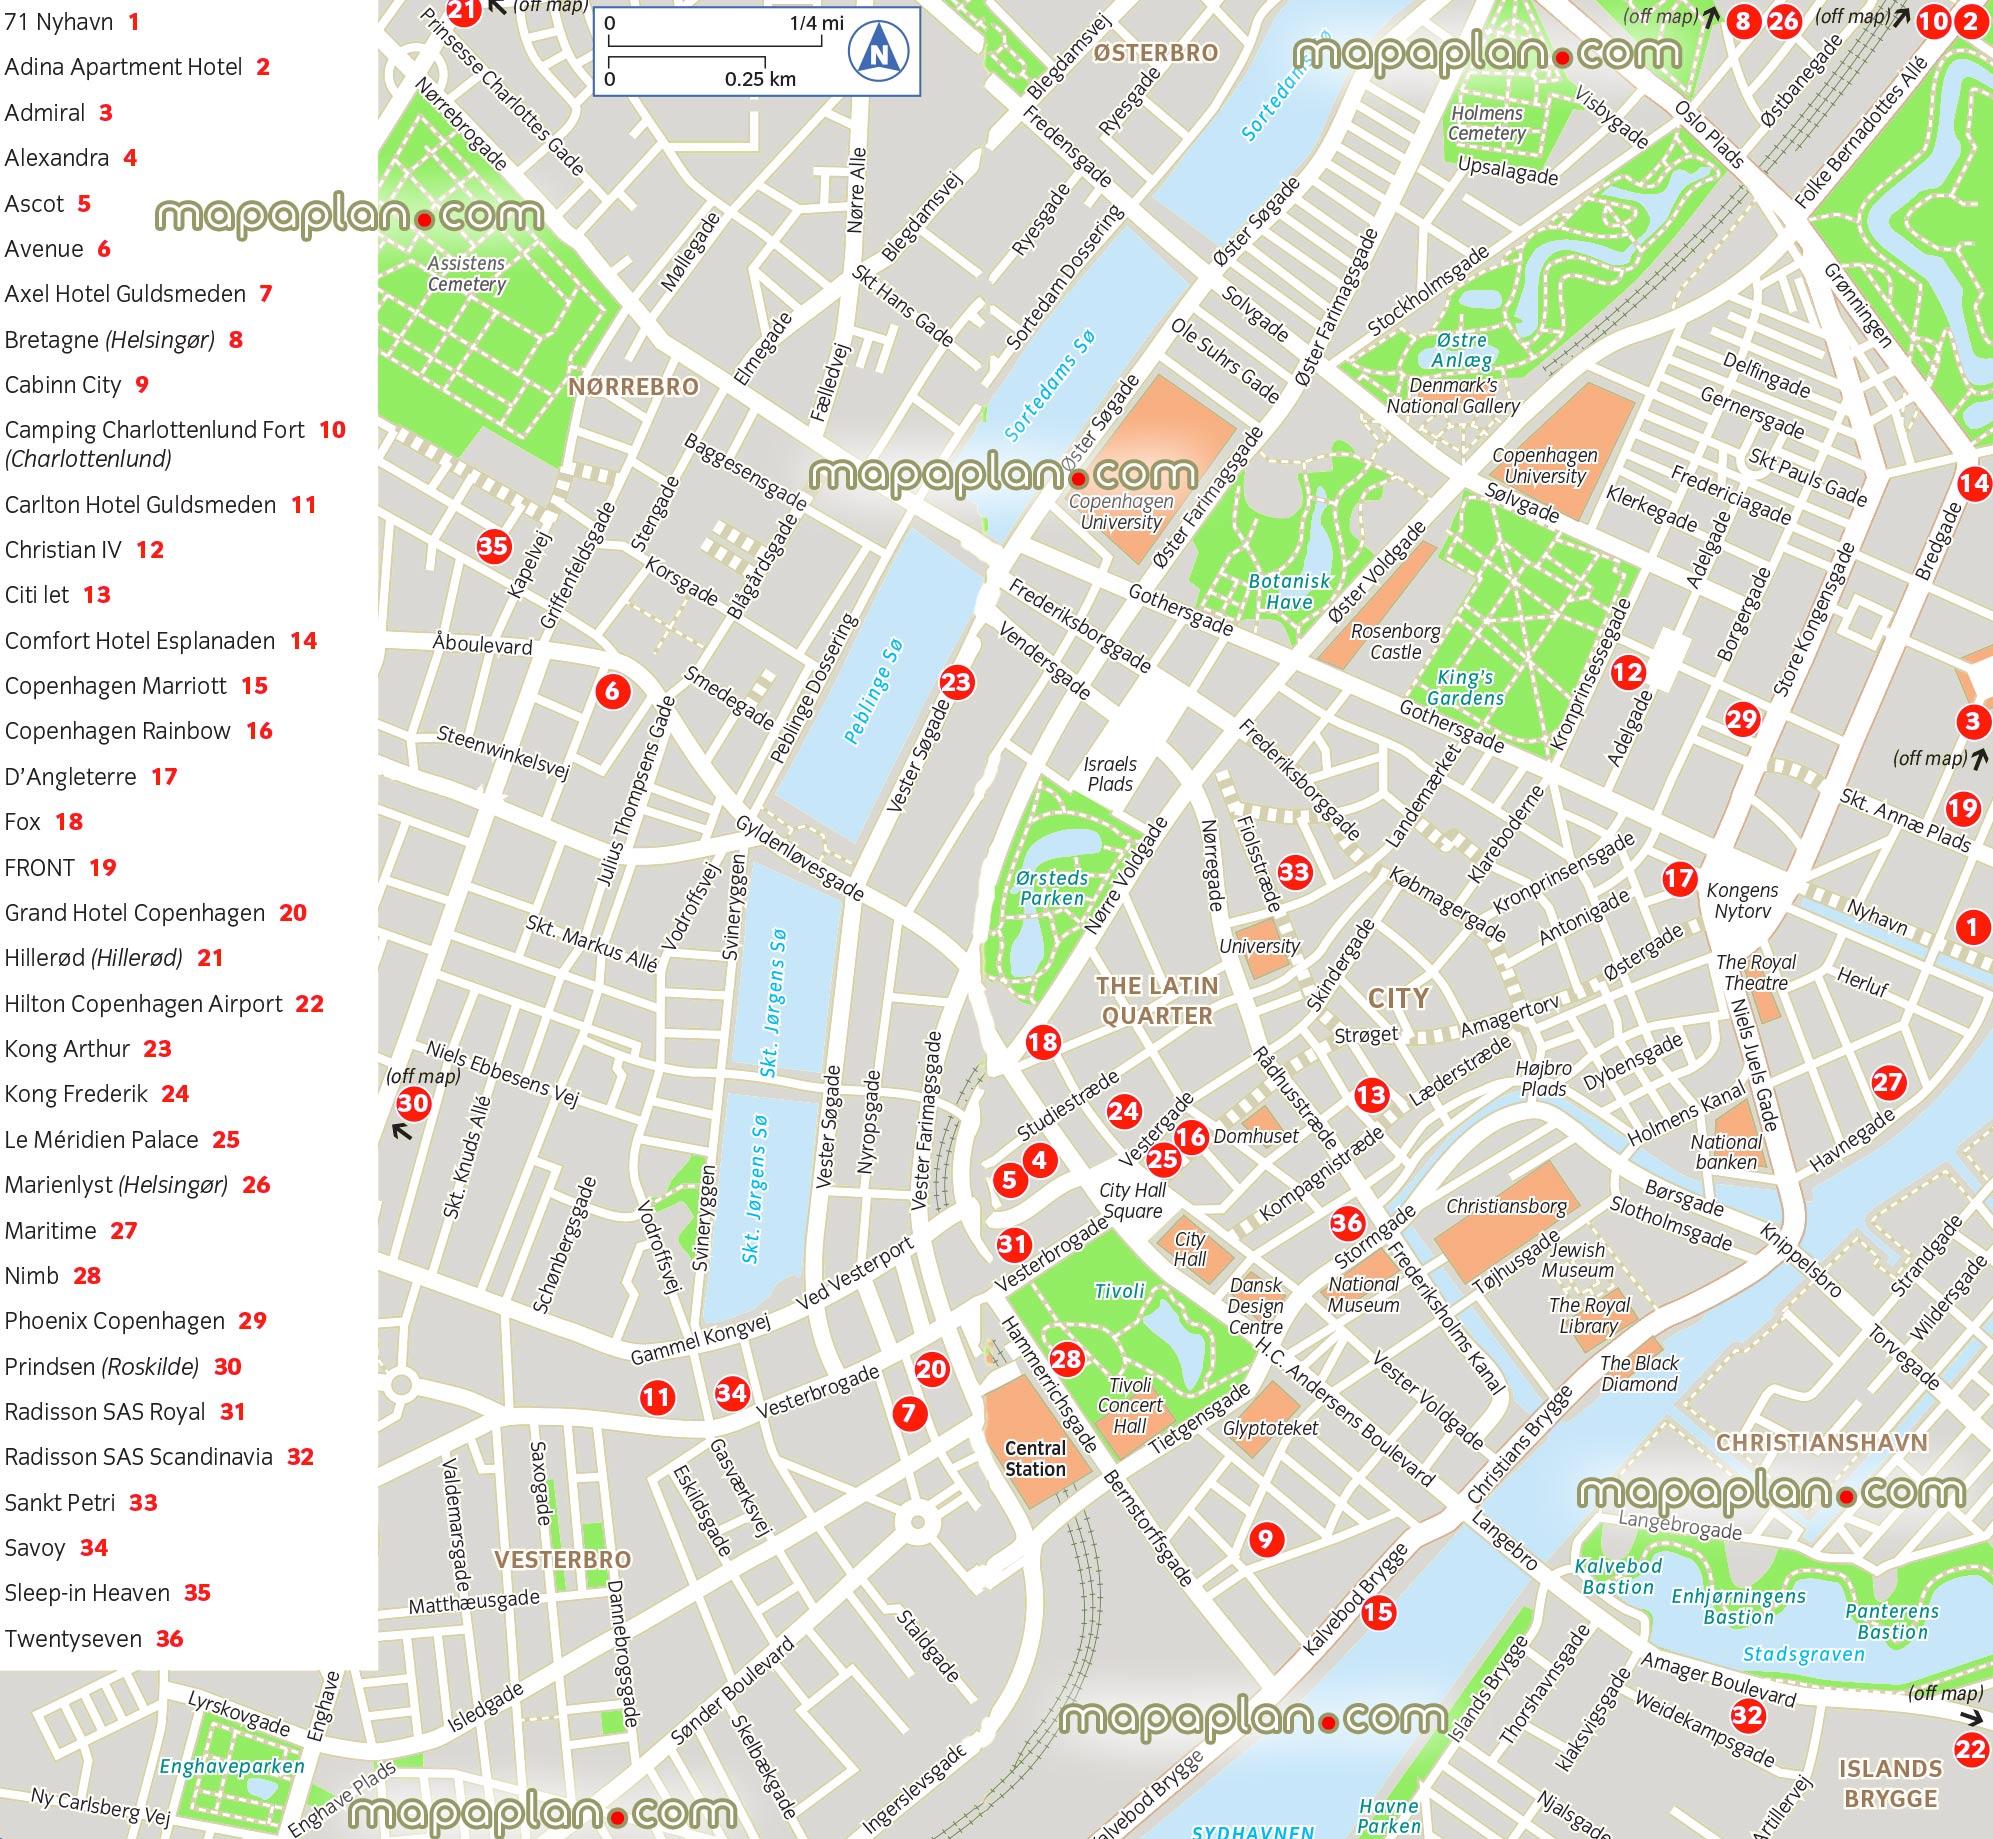 Copenhagen City Tourist Map